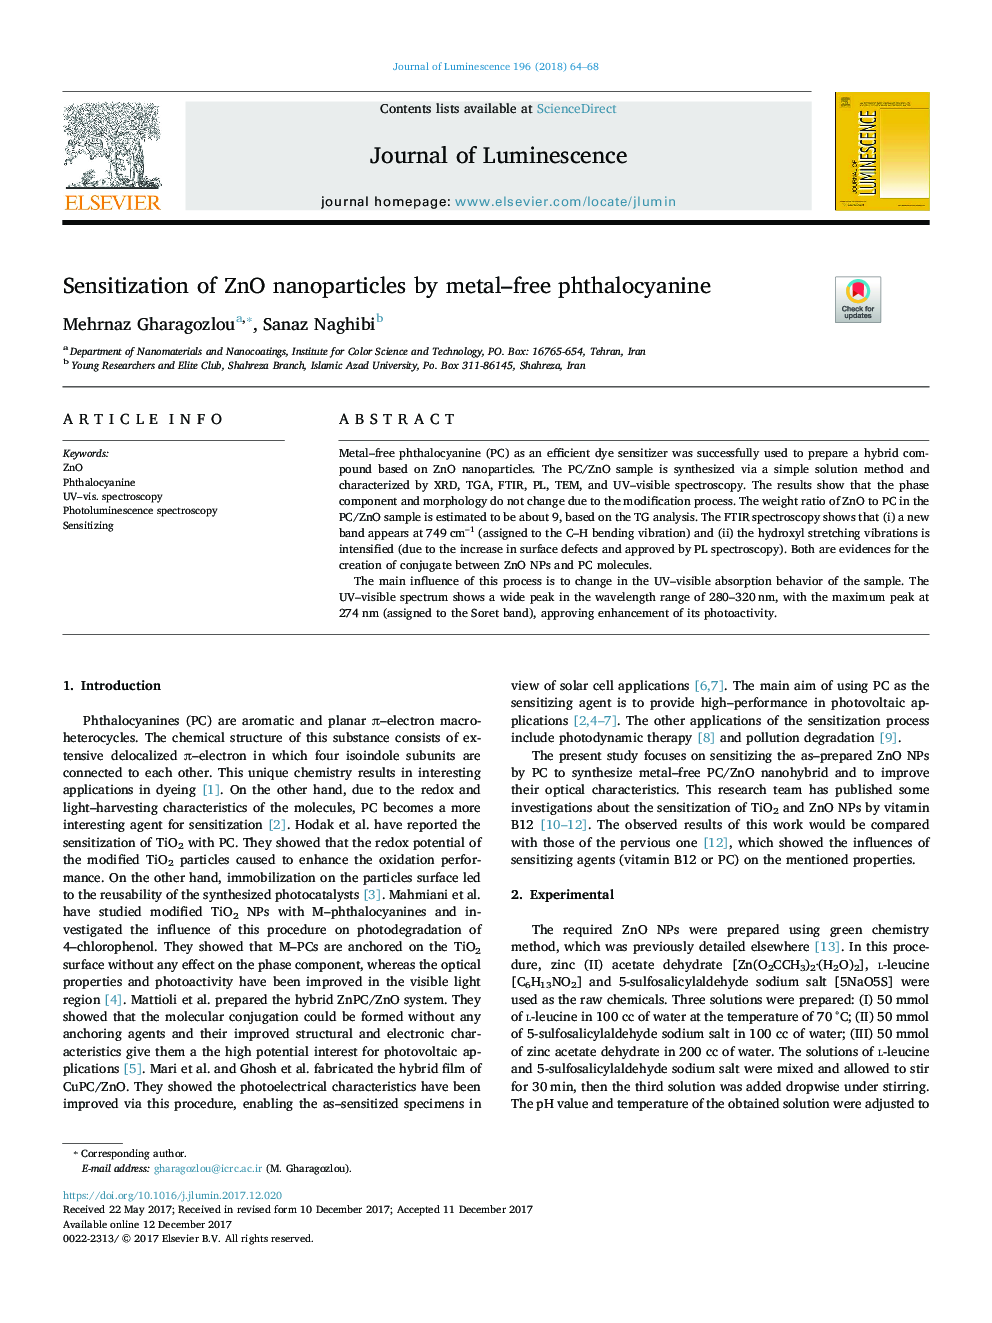 Sensitization of ZnO nanoparticles by metal-free phthalocyanine